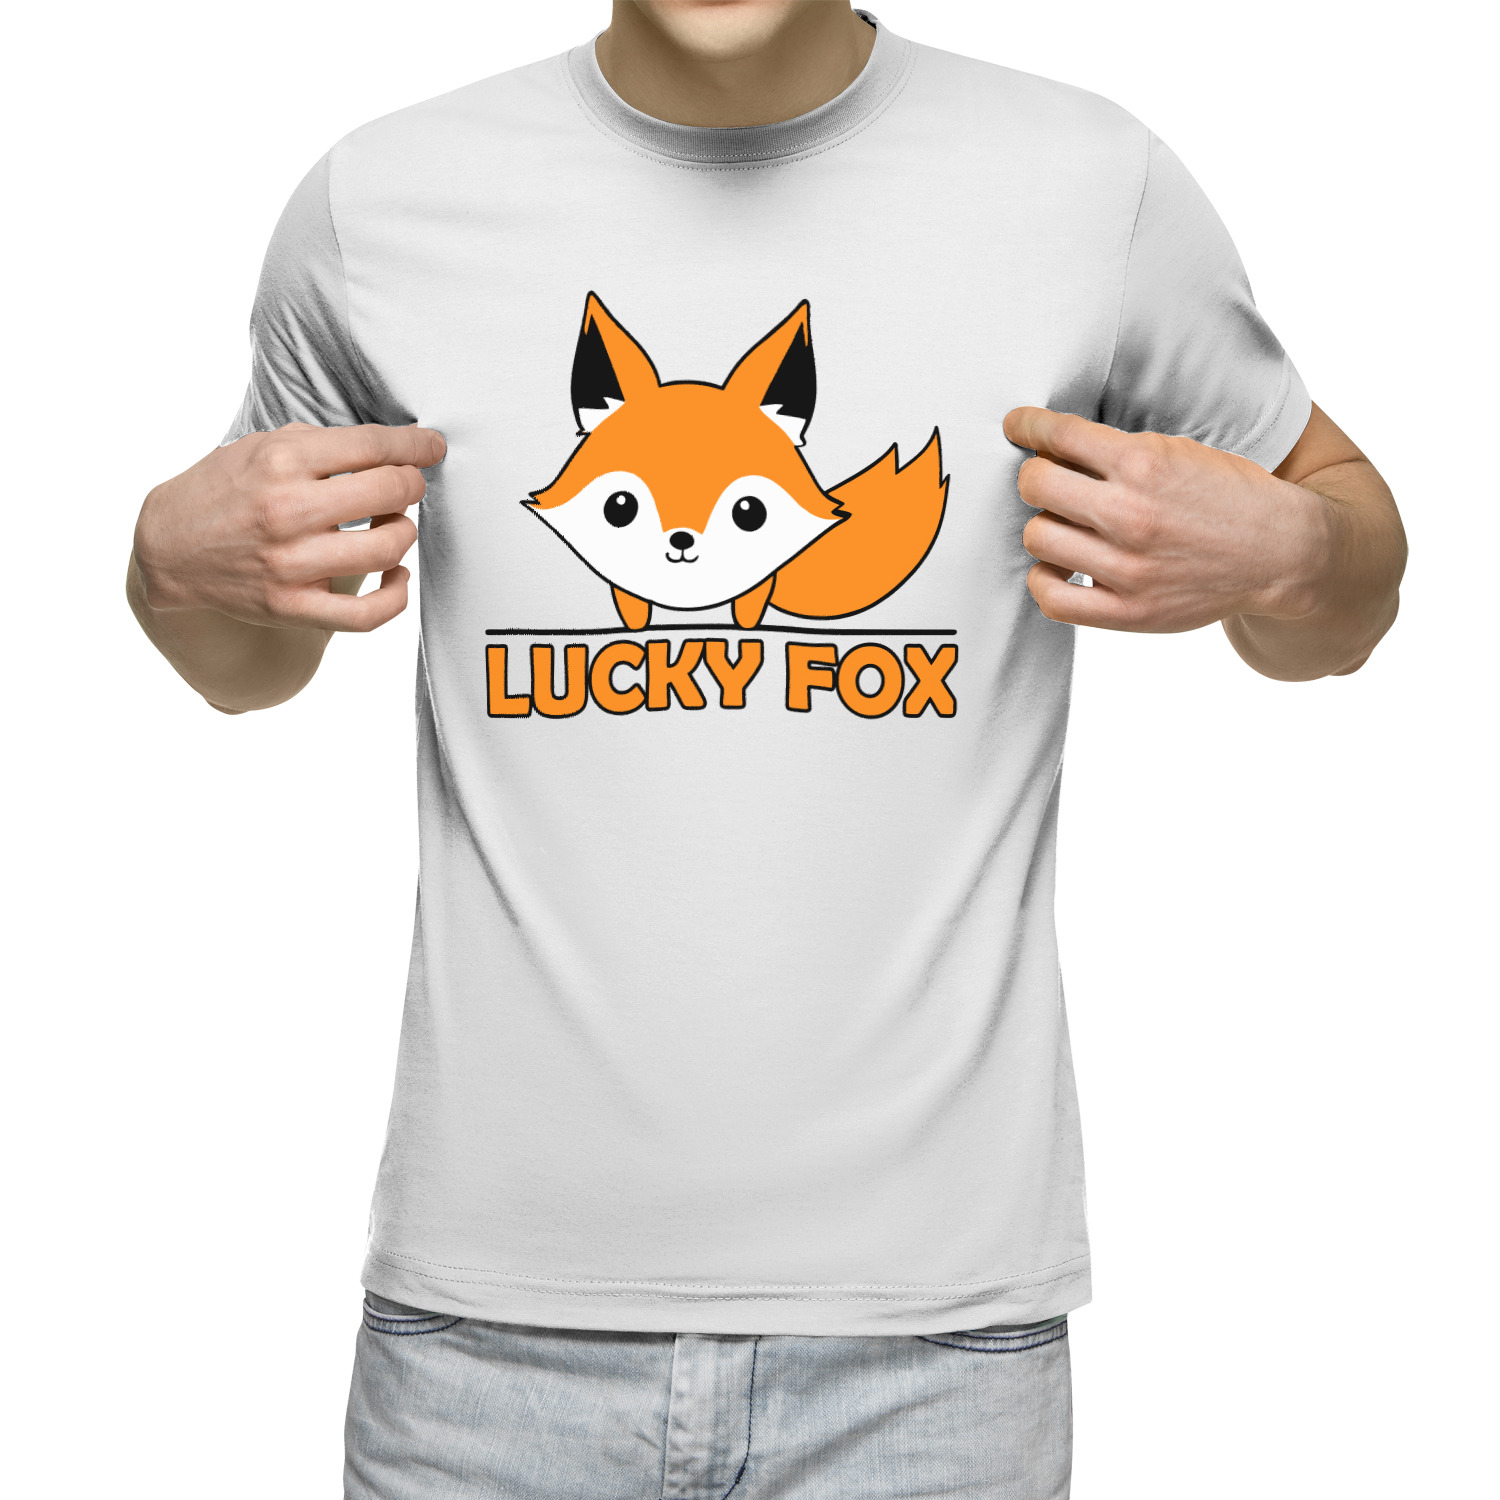 Lucky fox. Картина удачливая лисица купить.